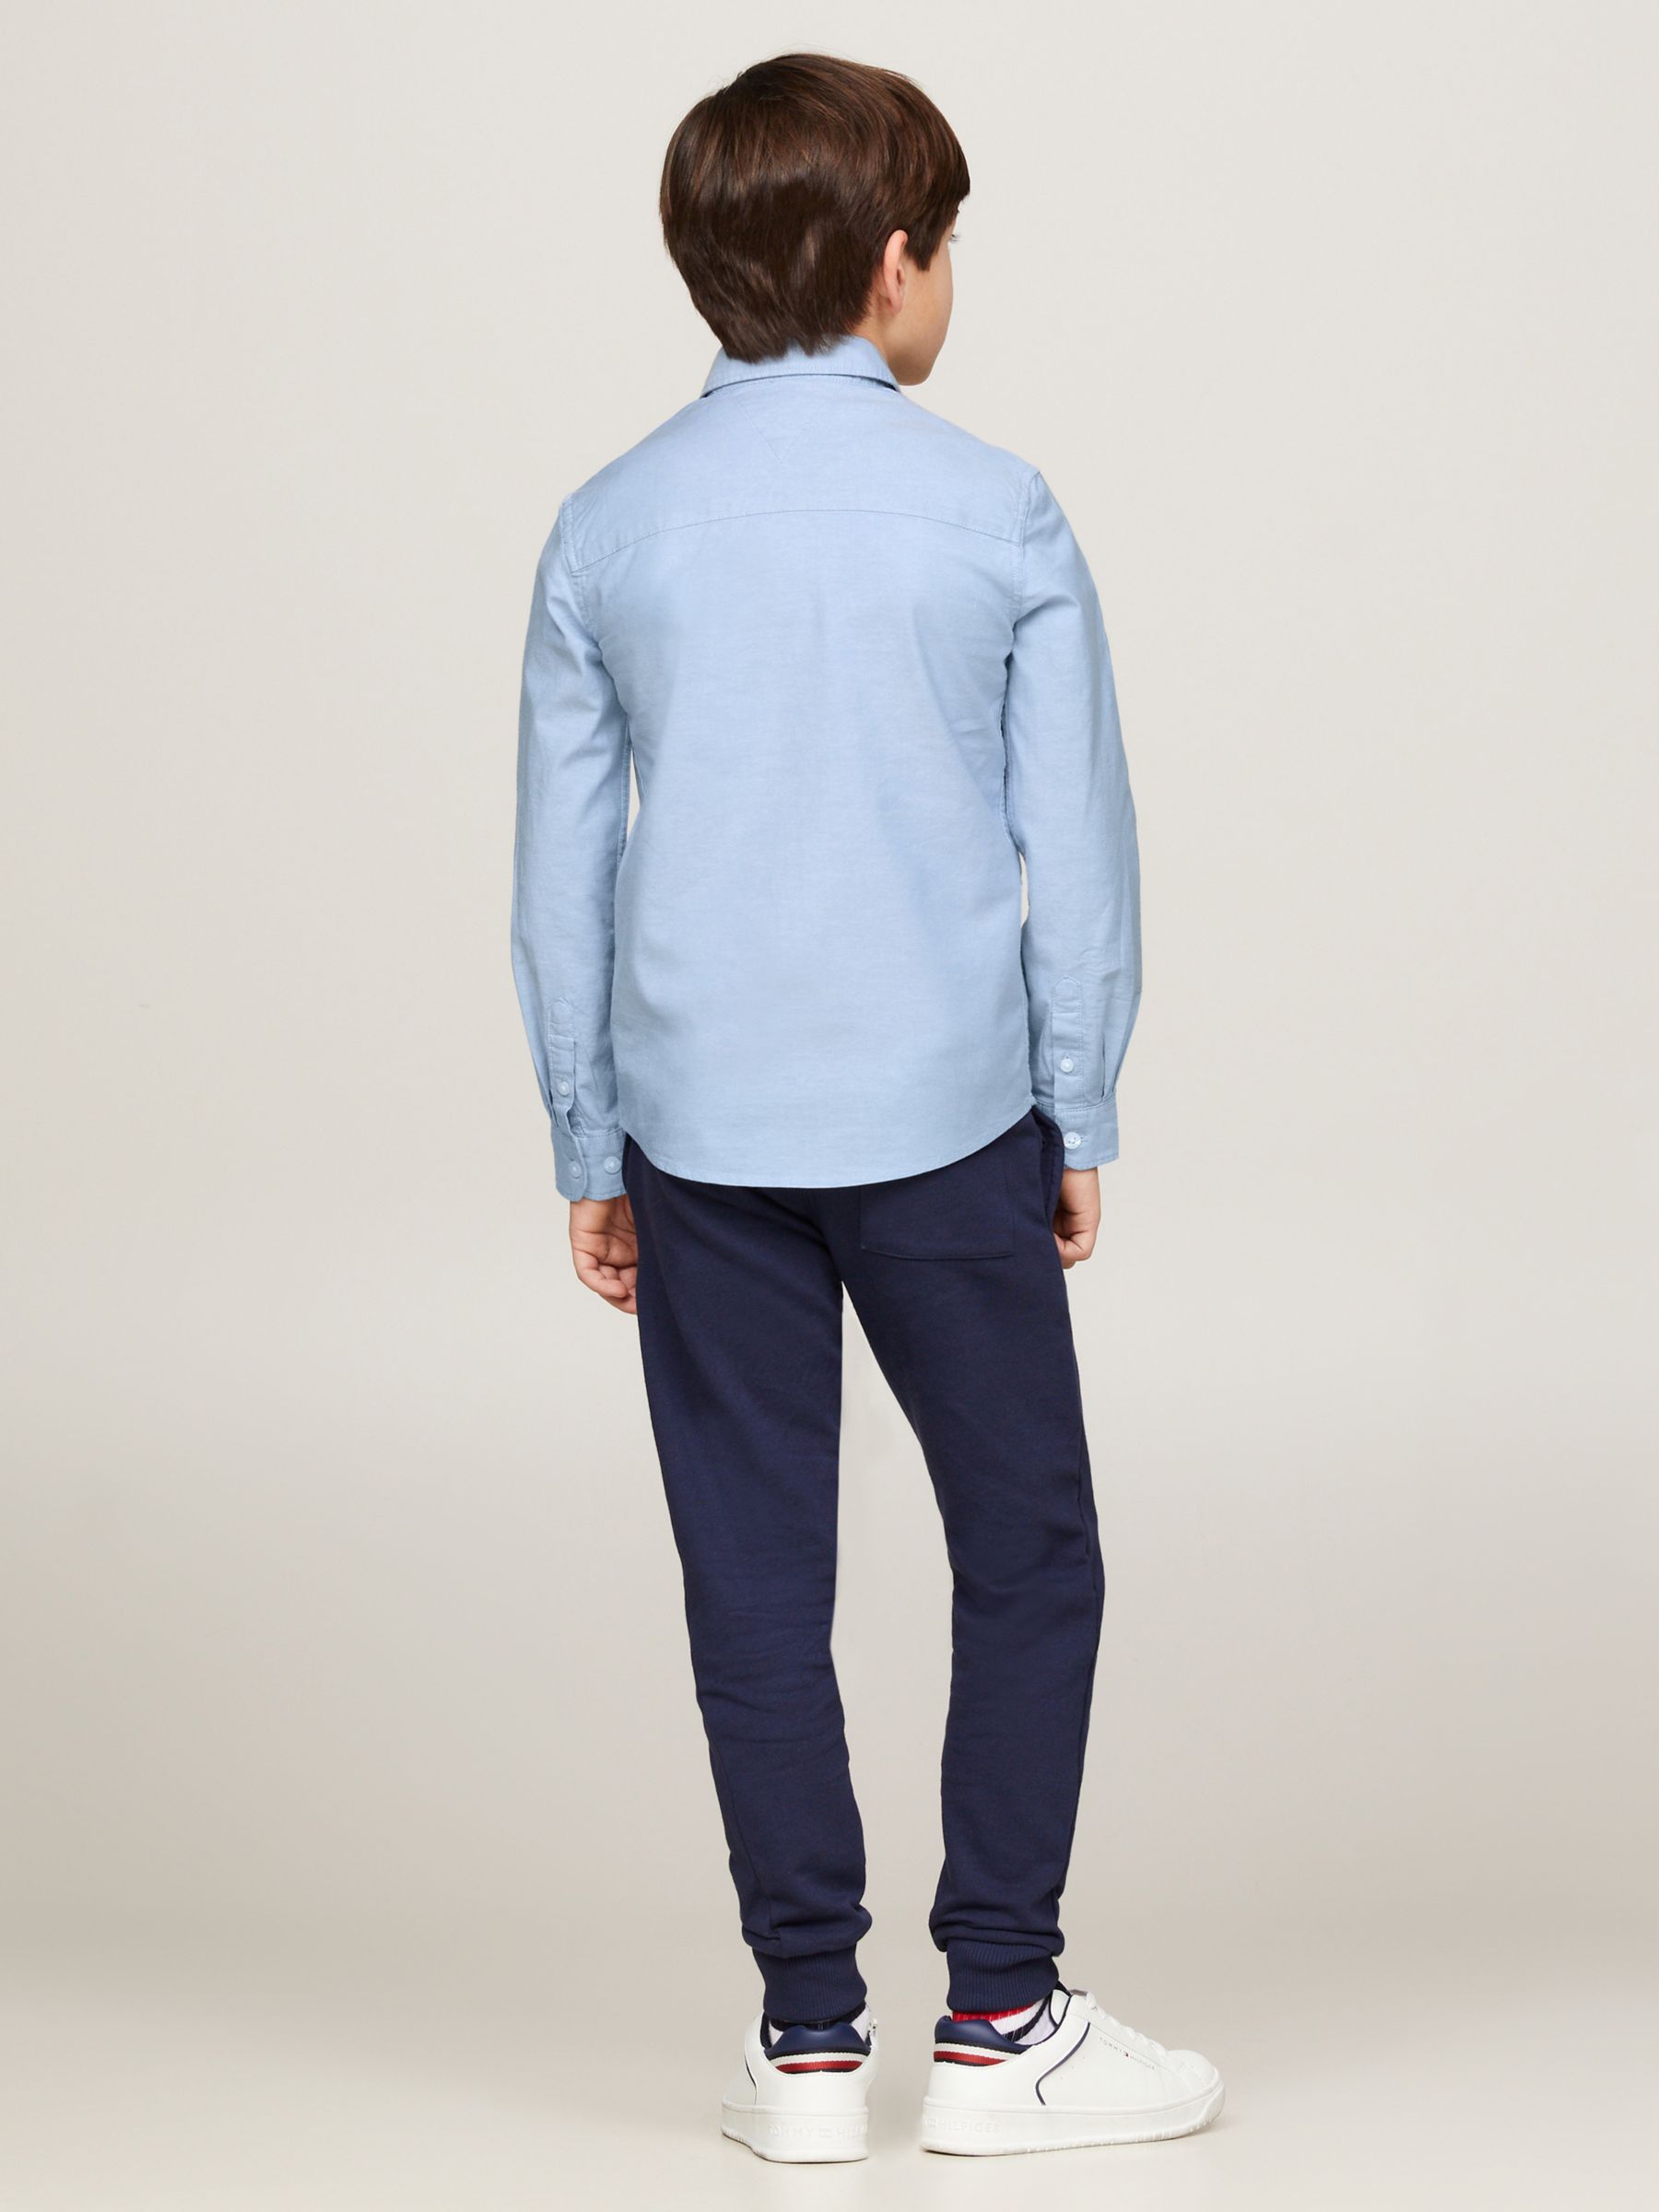 Tommy Hilfiger Kids' Organic Cotton Blend Stretch Oxford Shirt, Calm Blue, 3 years